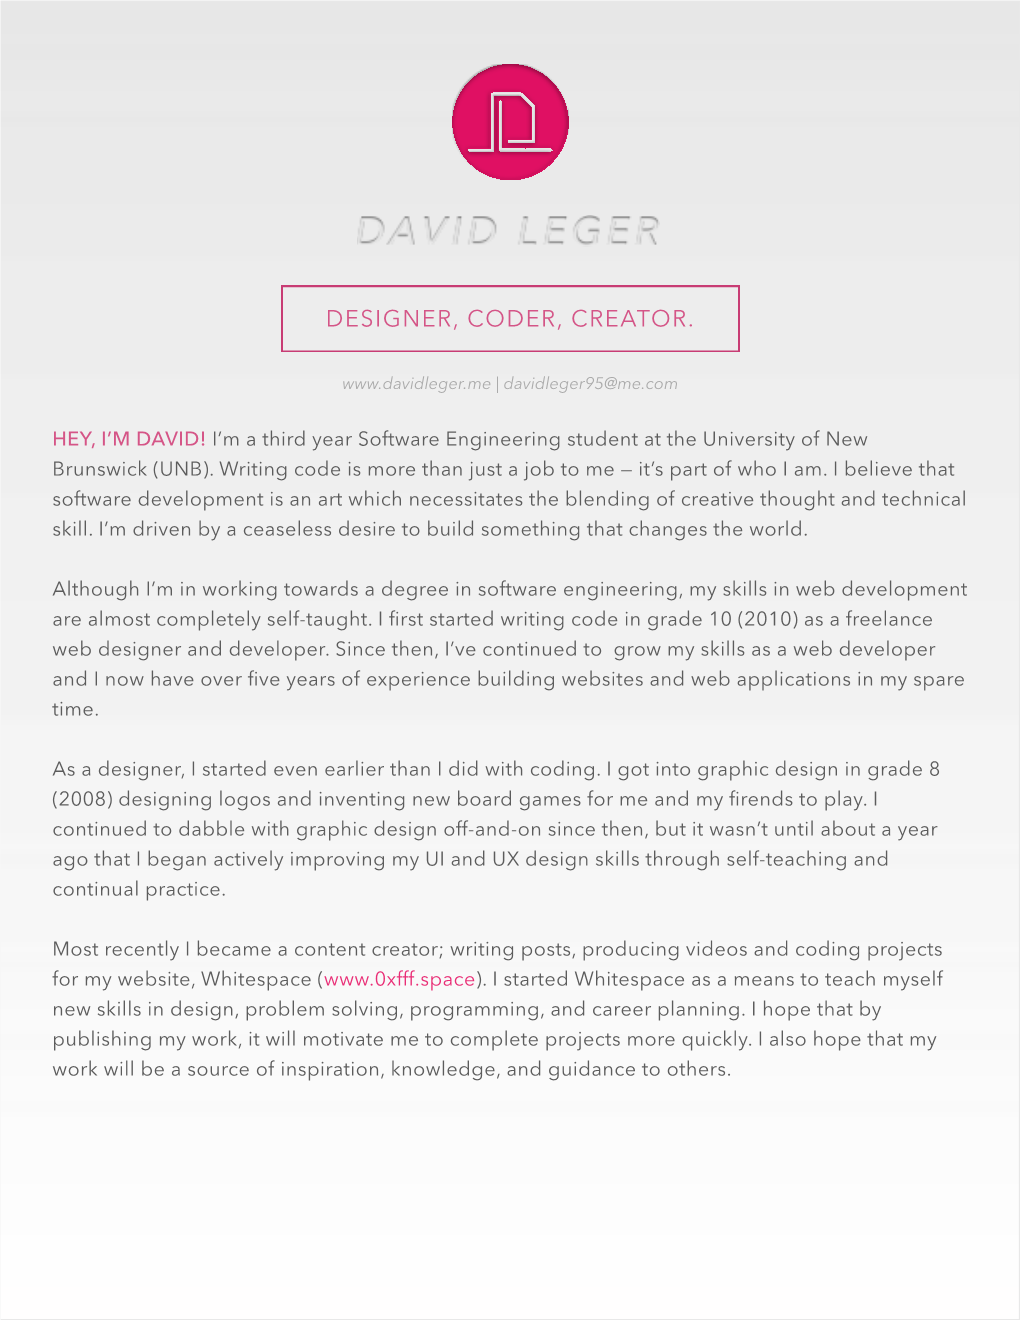 Designer, Coder, Creator